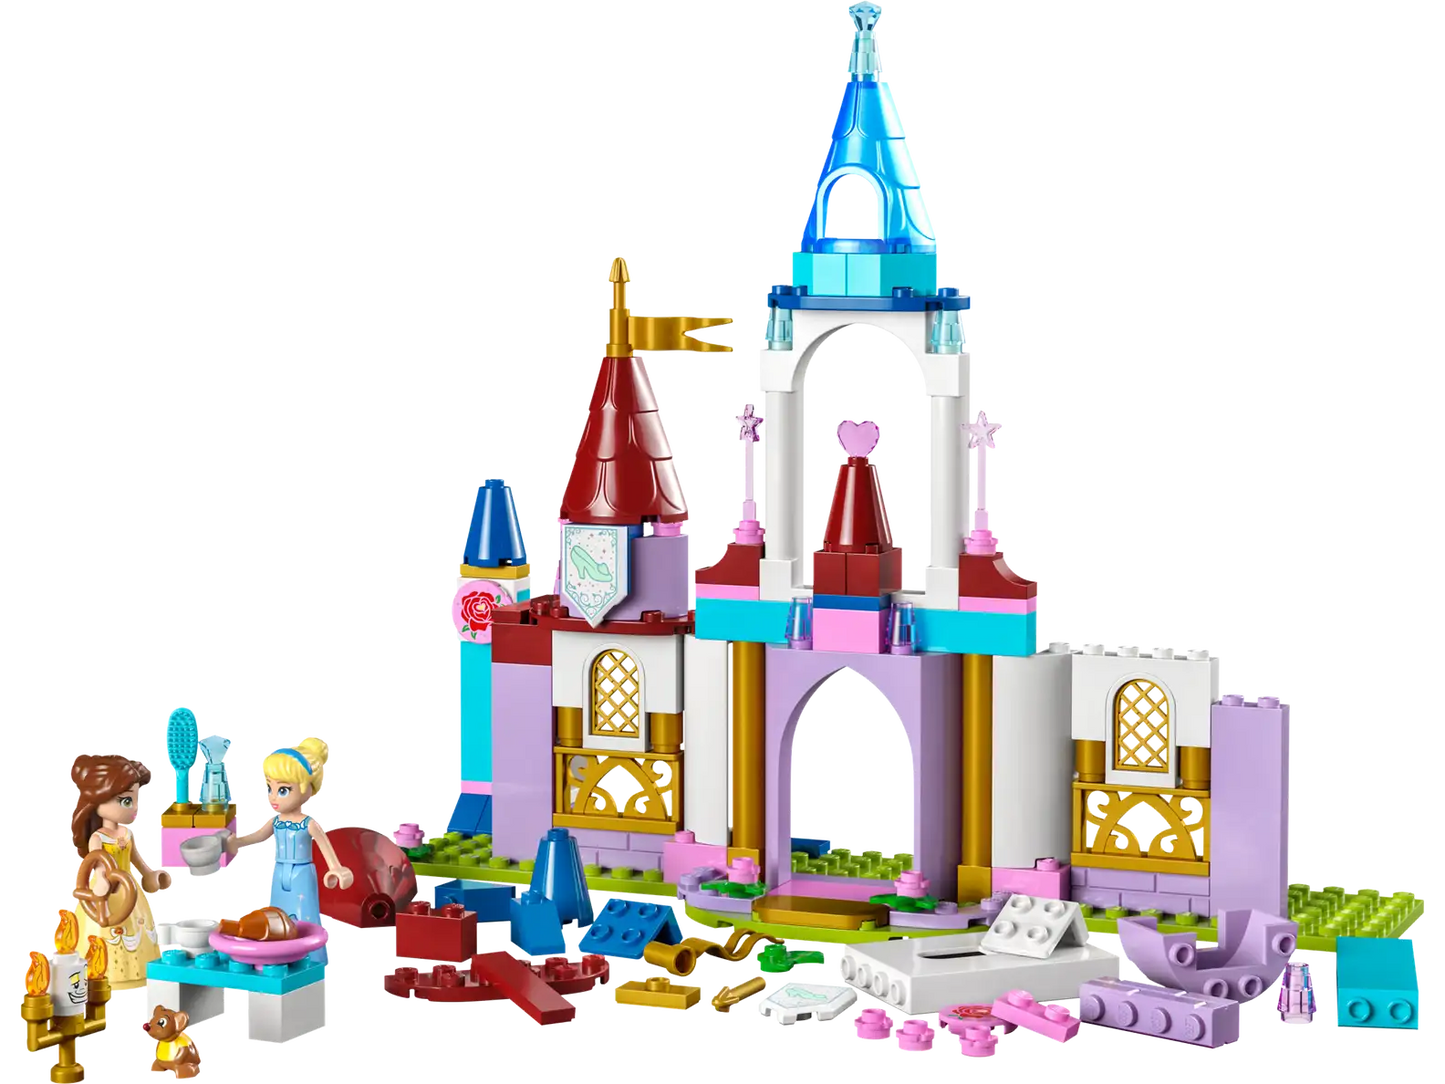 Lego - Disney Princess Creative Castles